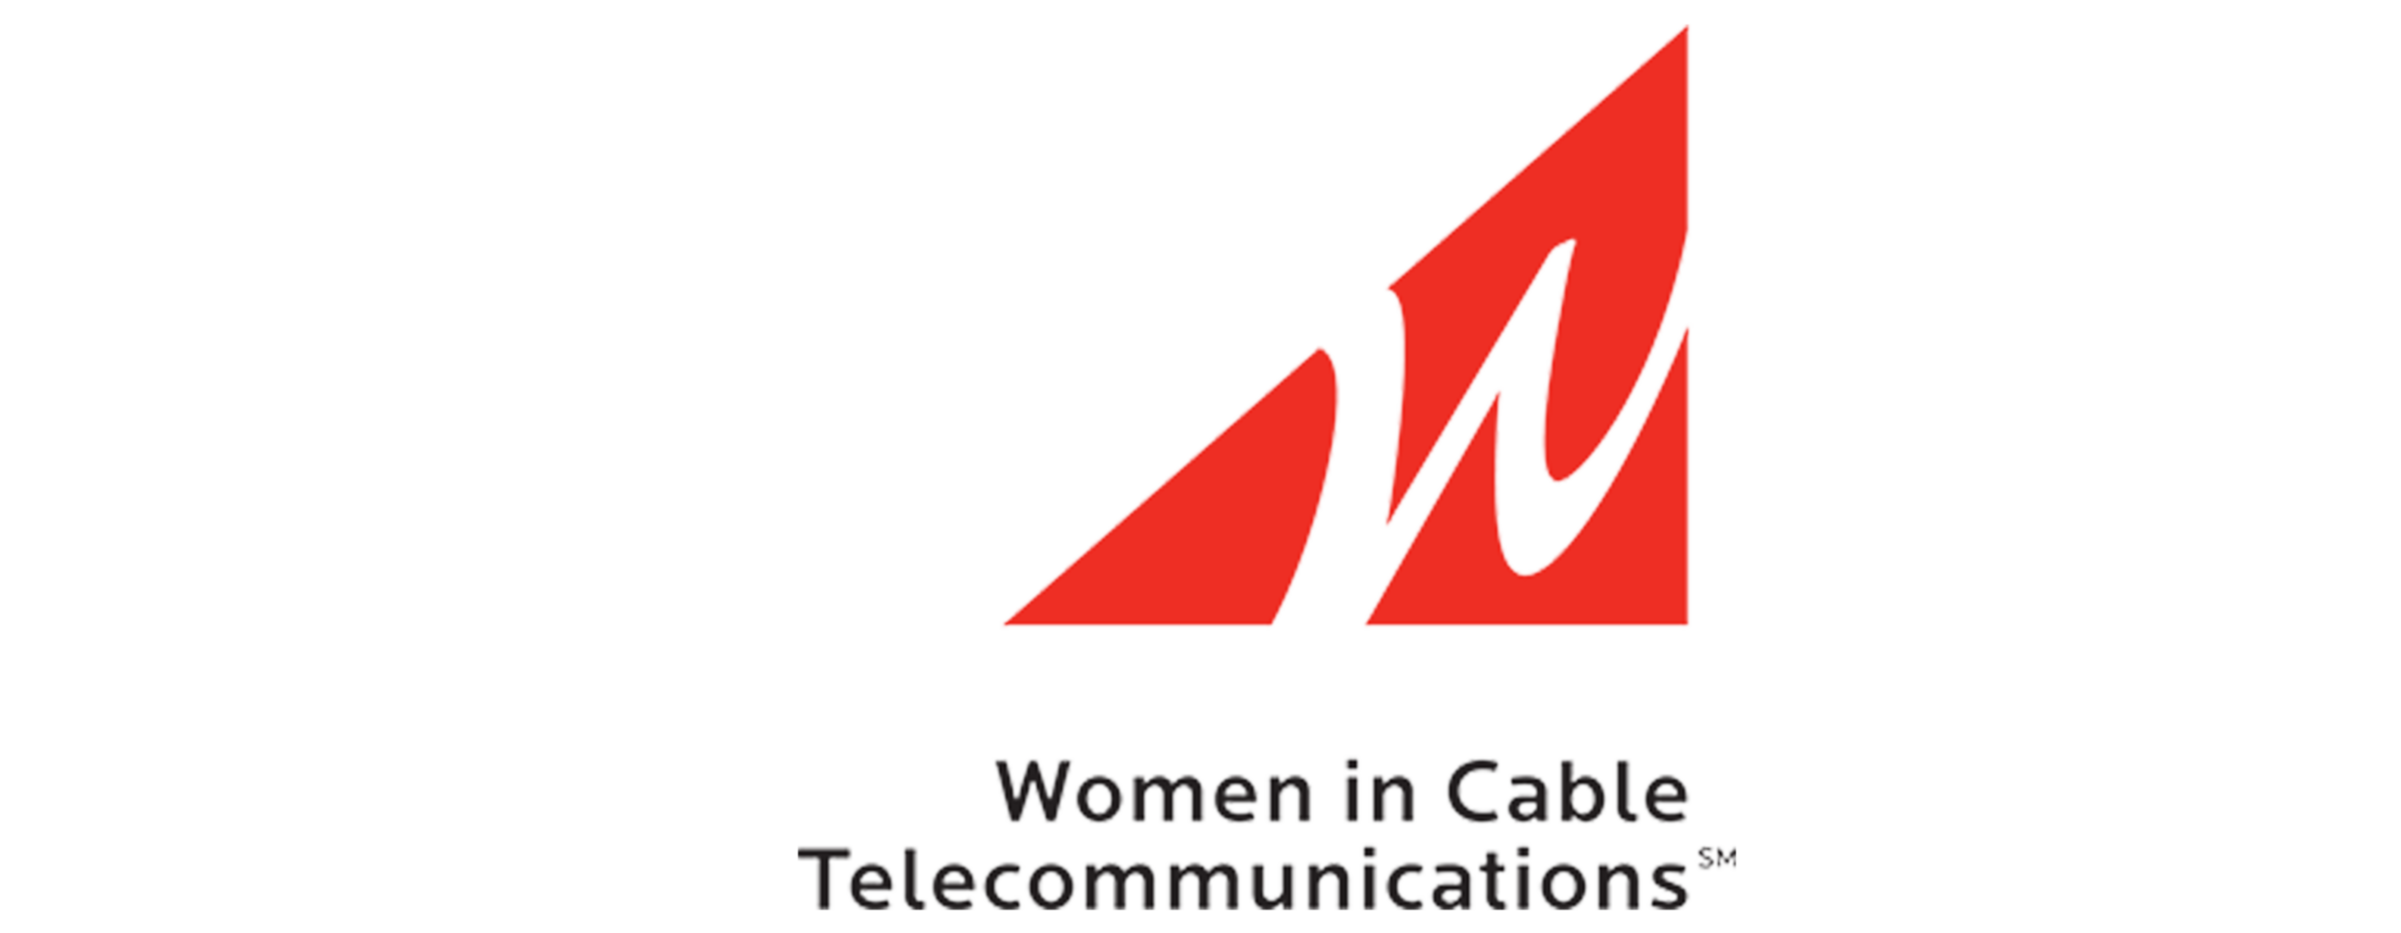 Logo de Women in Cable Telecomunications (WICT)